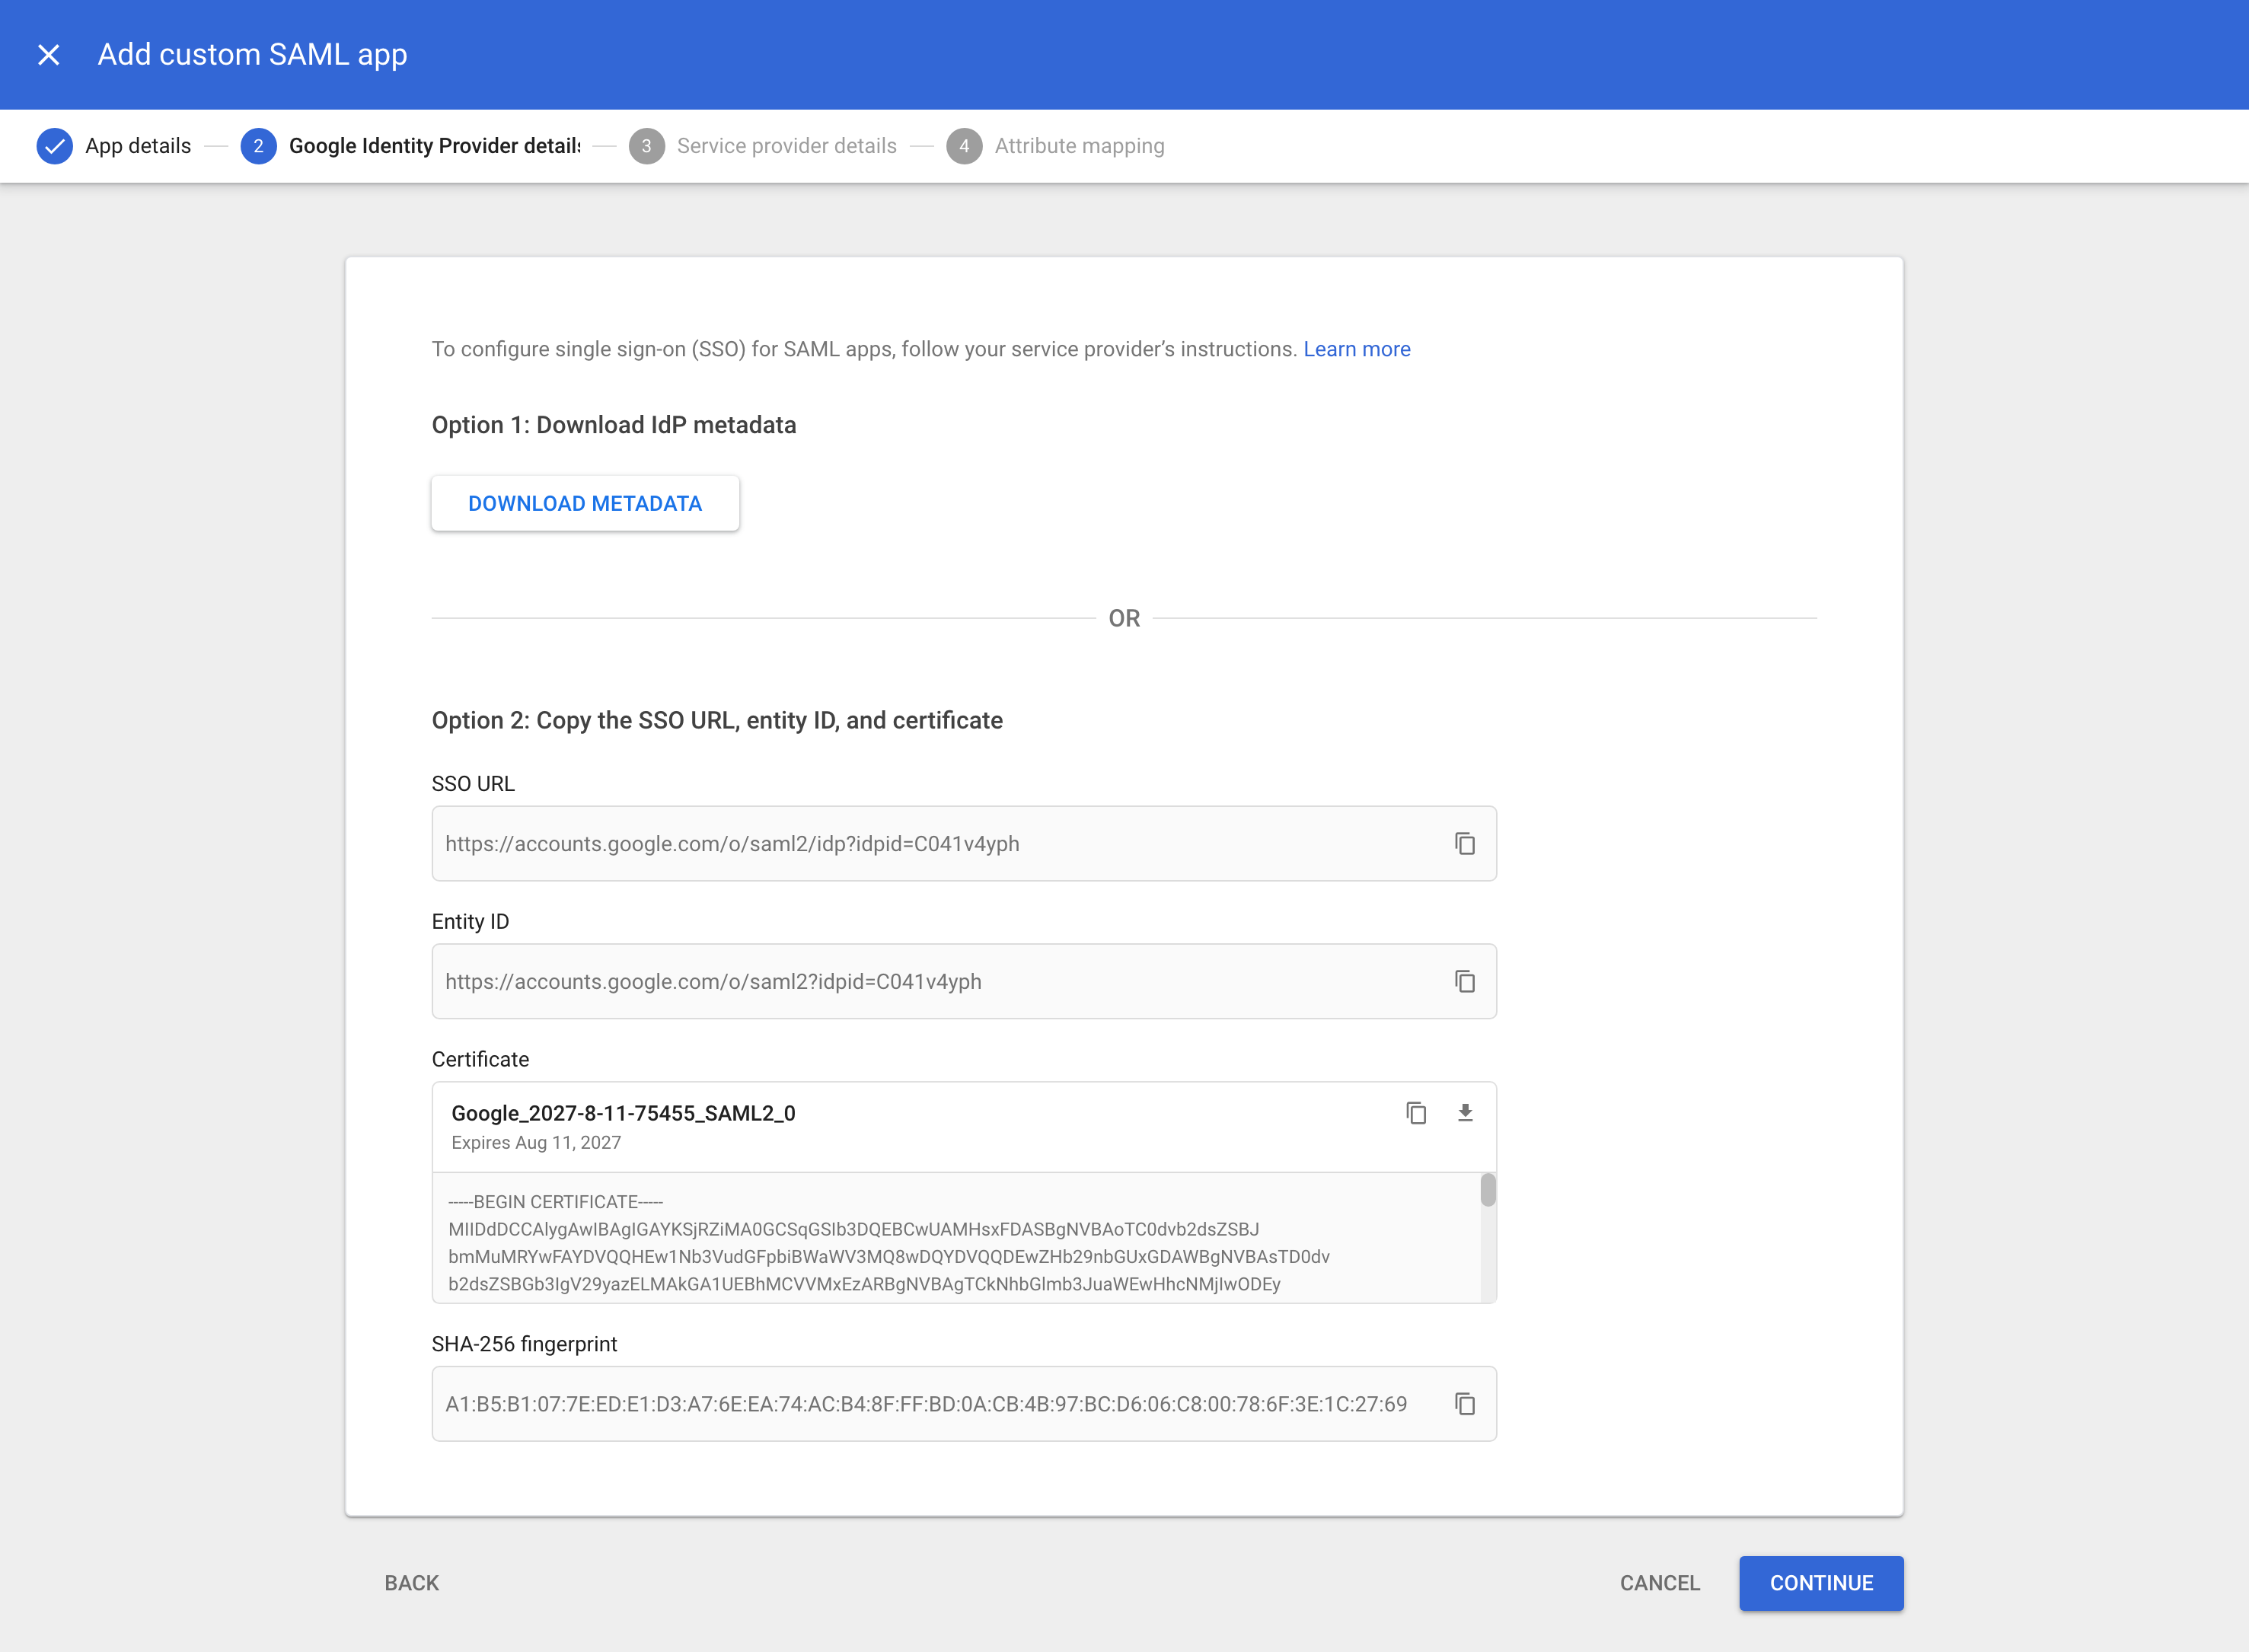 Google Workspace: Web and mobile apps admin console, Add custom SAML, Google
Identity Provider details screen